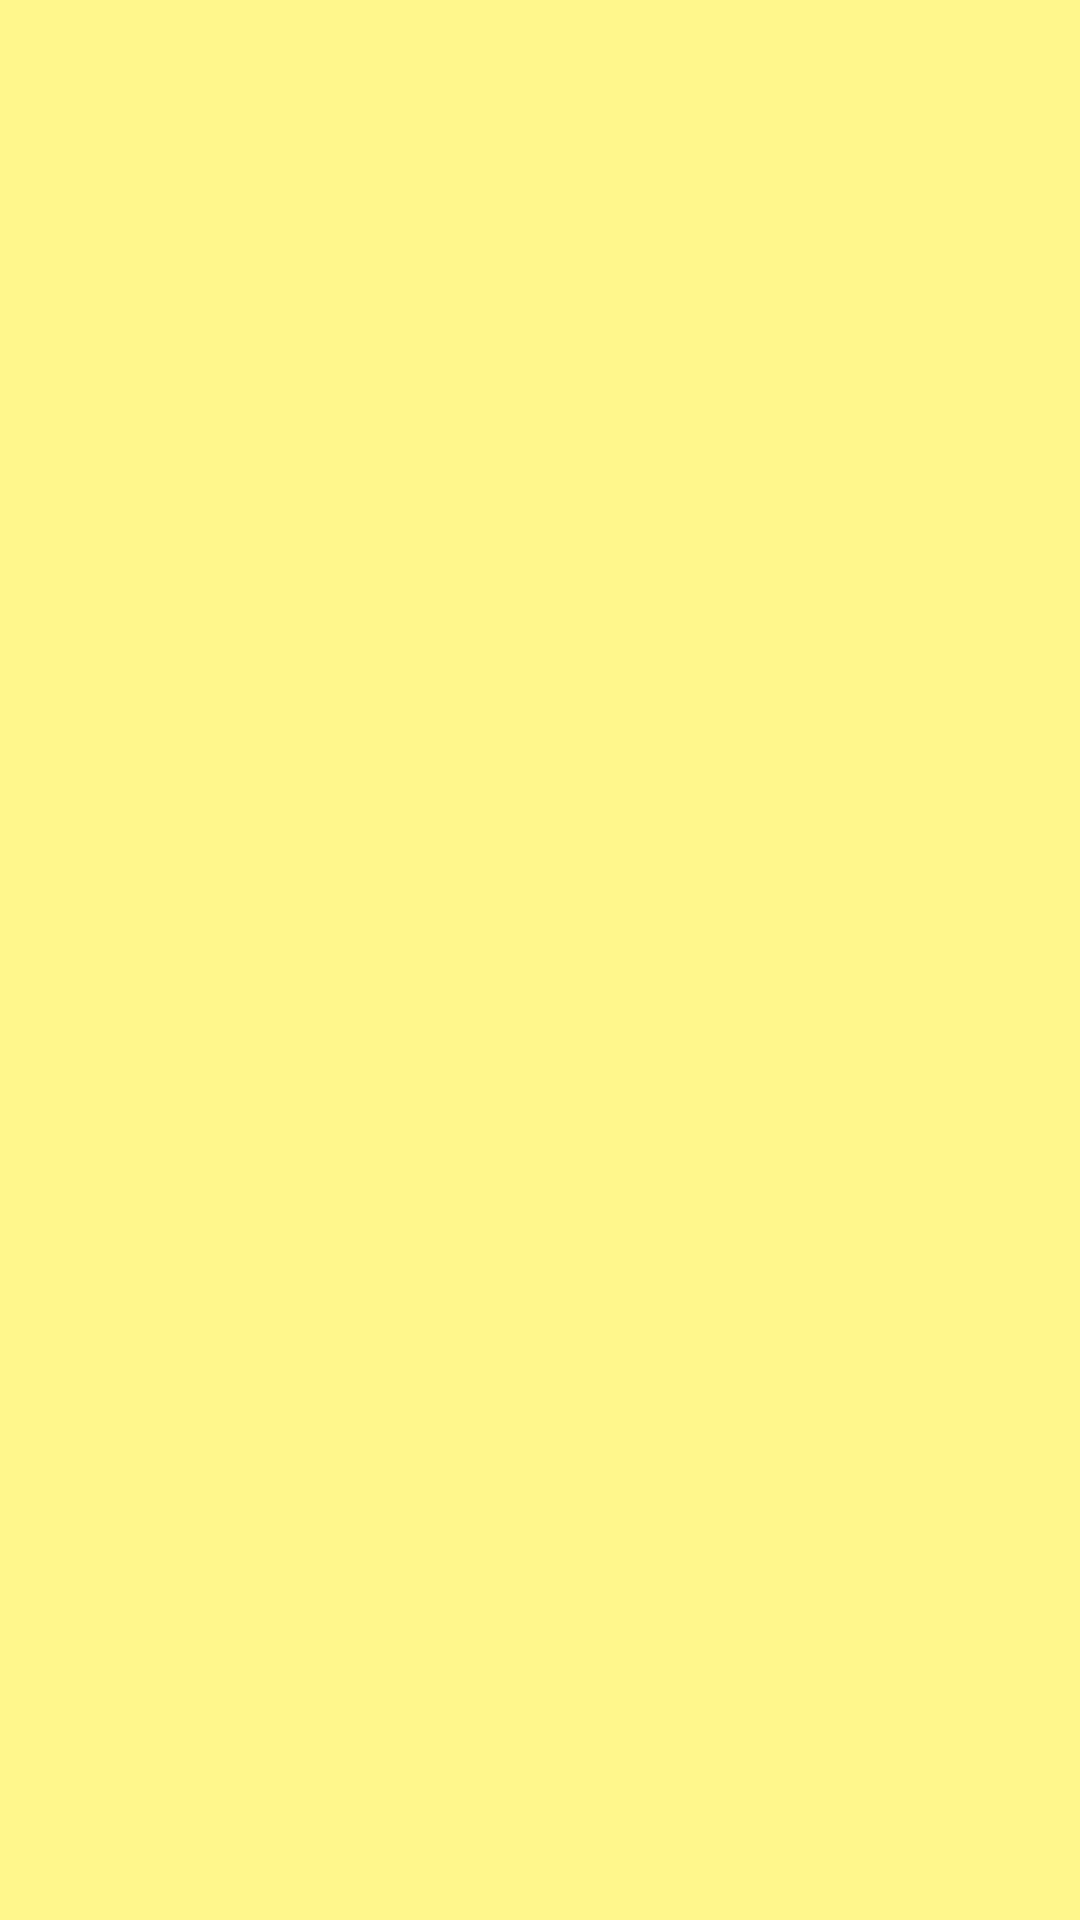 Plain Yellow iPhone Wallpaper Free Plain Yellow iPhone Background